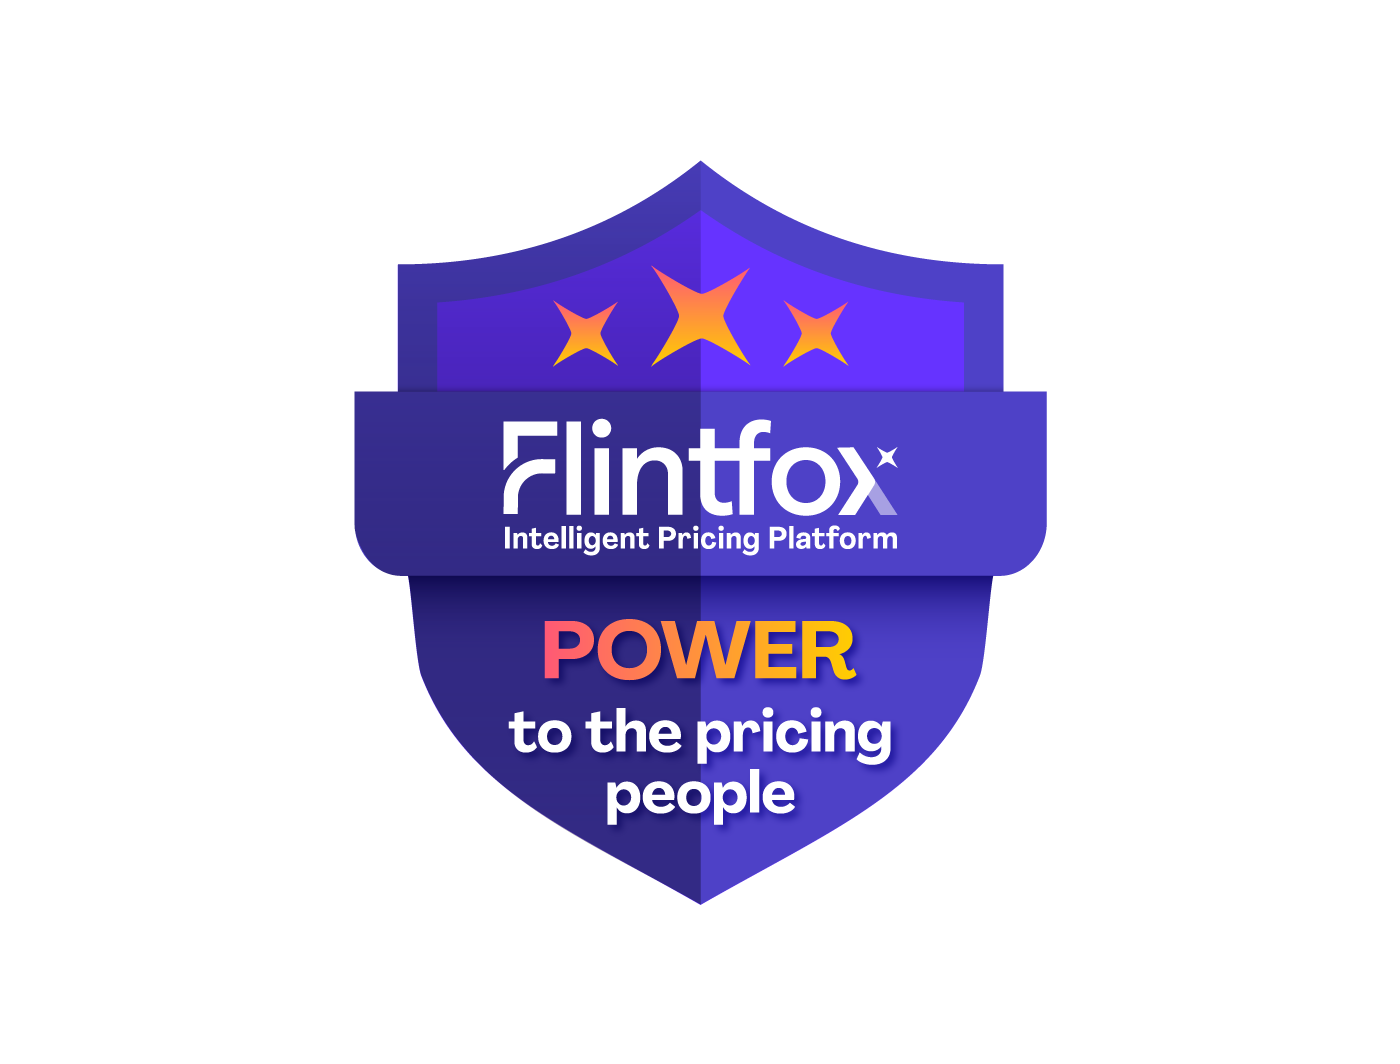 Flintfox power to the pricing people